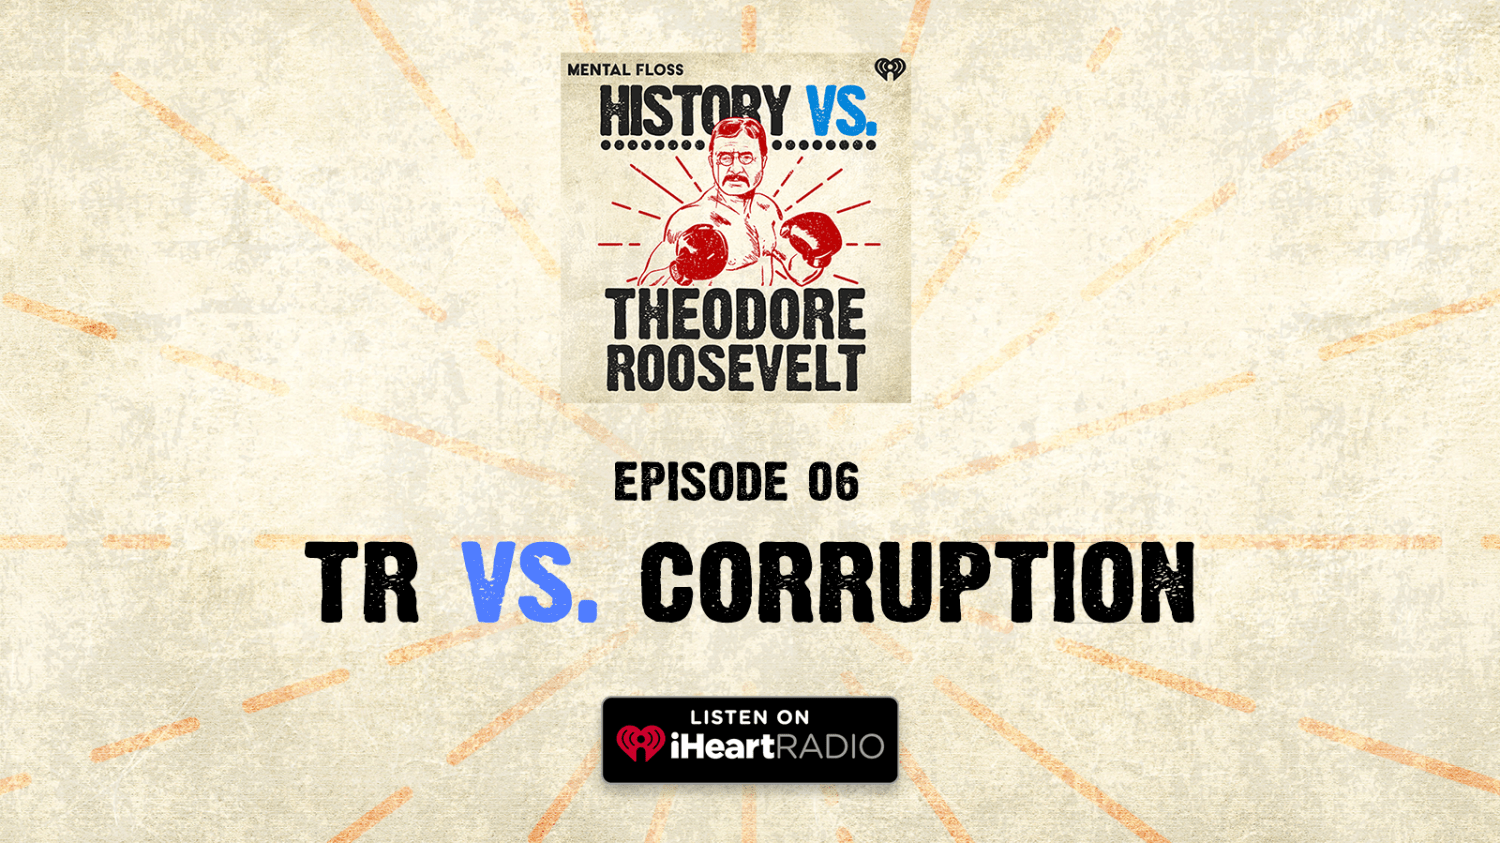 History Vs. Episode 6: Theodore Roosevelt vs. Corruption